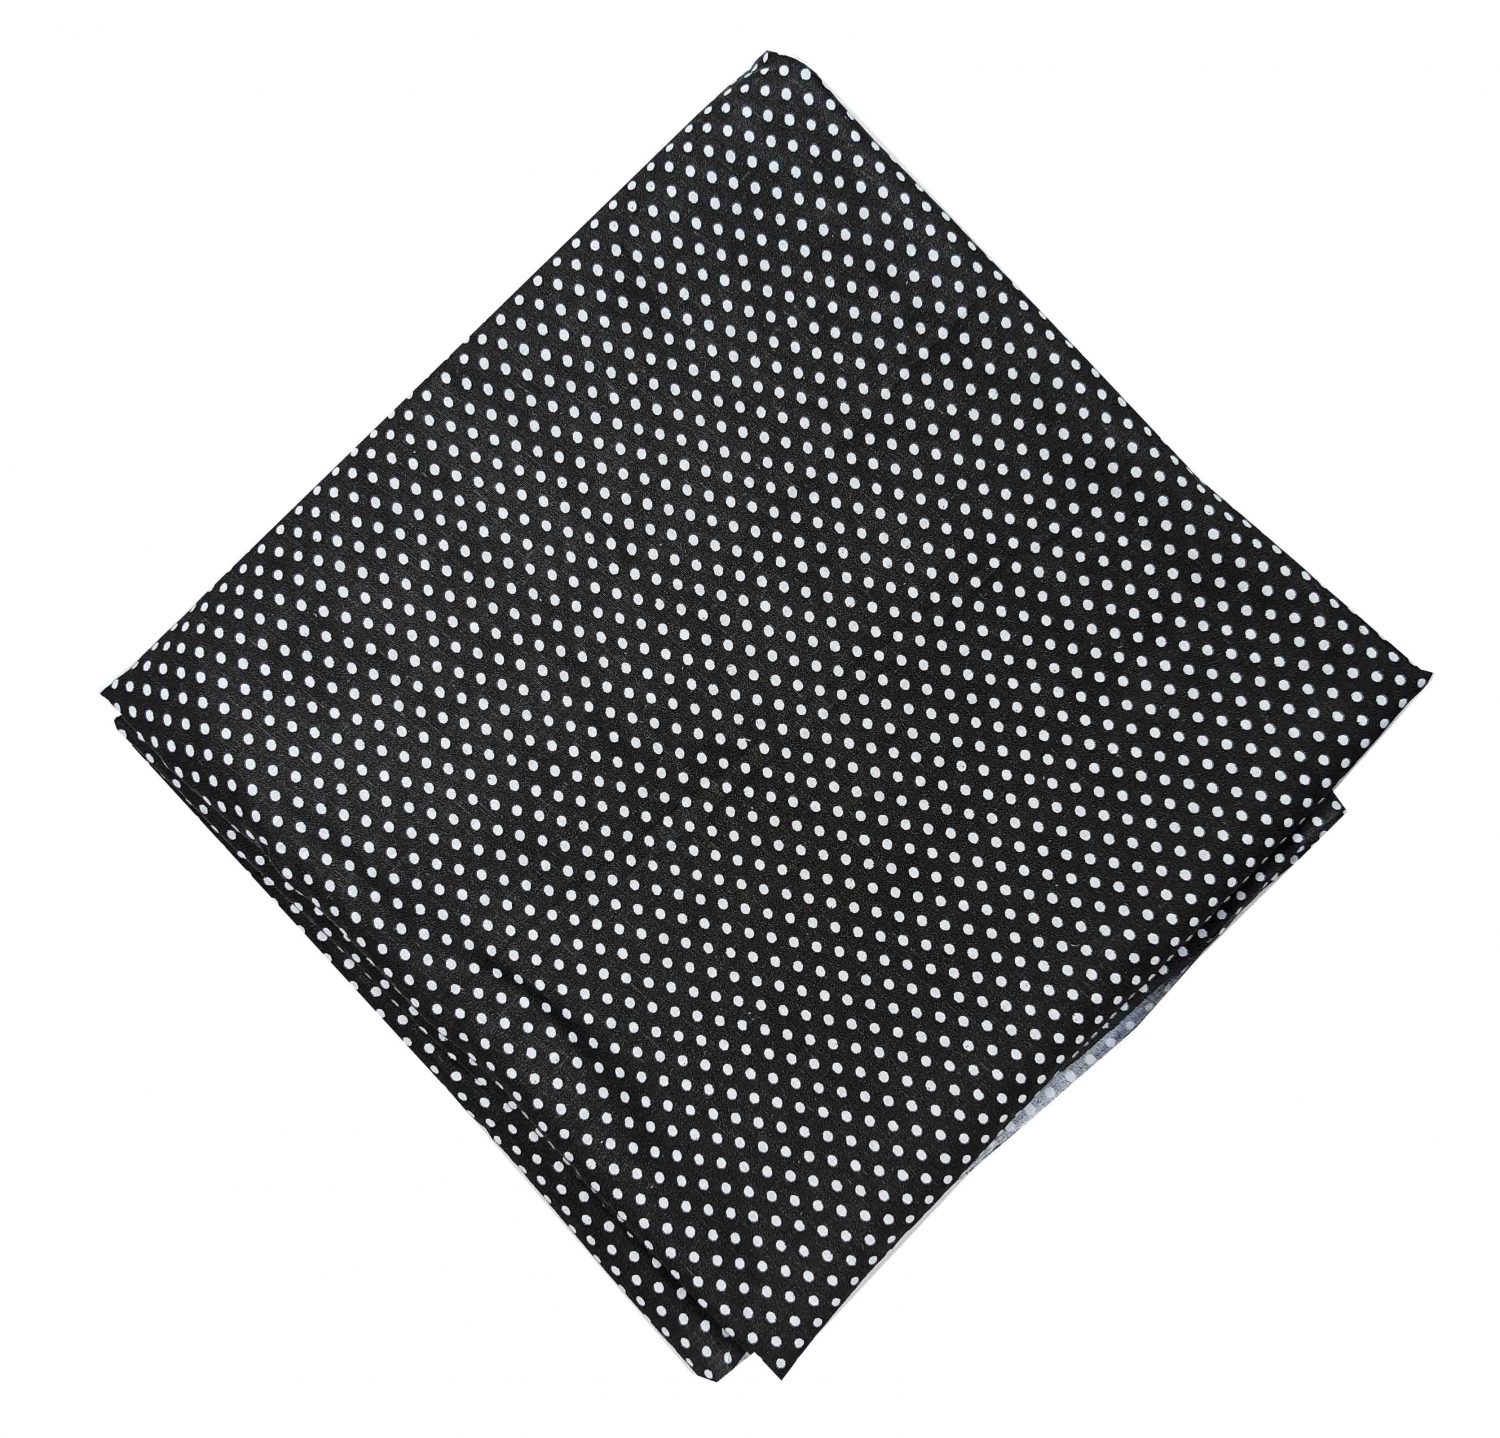 Black base White Polka Dots Cotton Printed Fabric Dress Material PC509 1